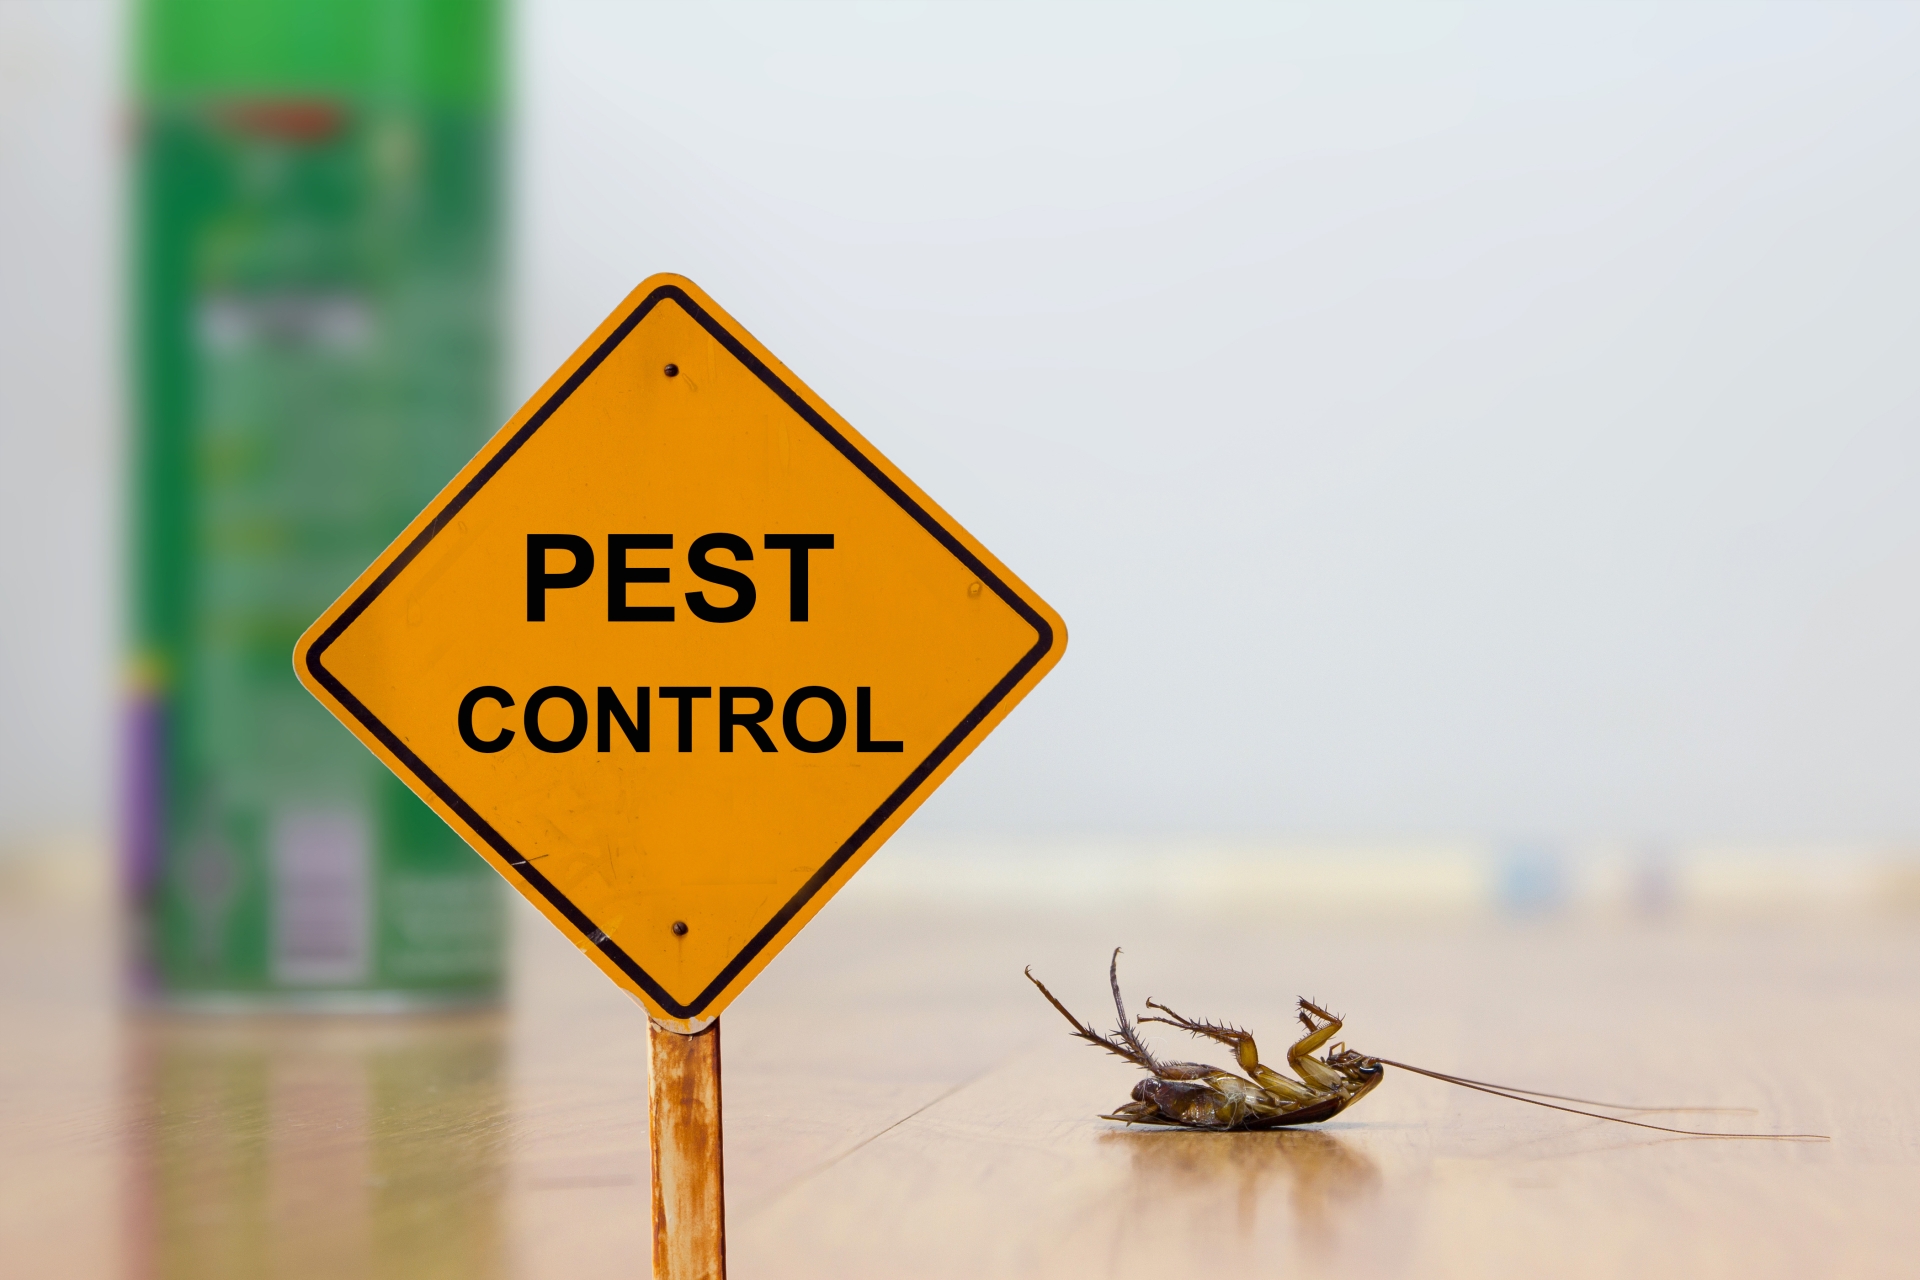 24 Hour Pest Control, Pest Control in Kensington, W8. Call Now 020 8166 9746